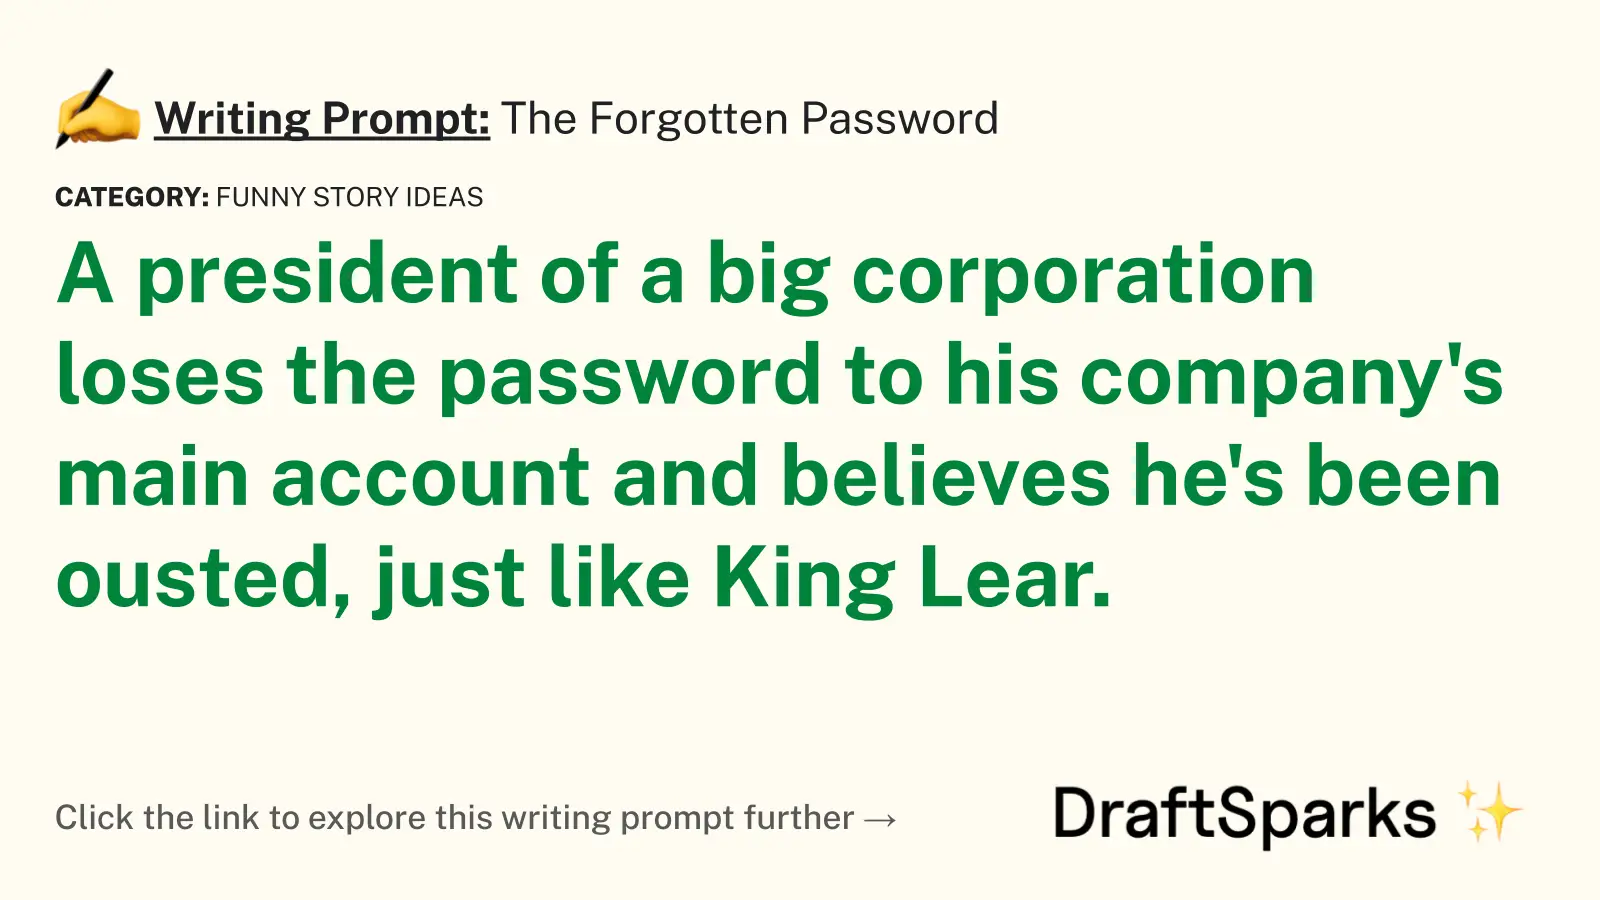 The Forgotten Password